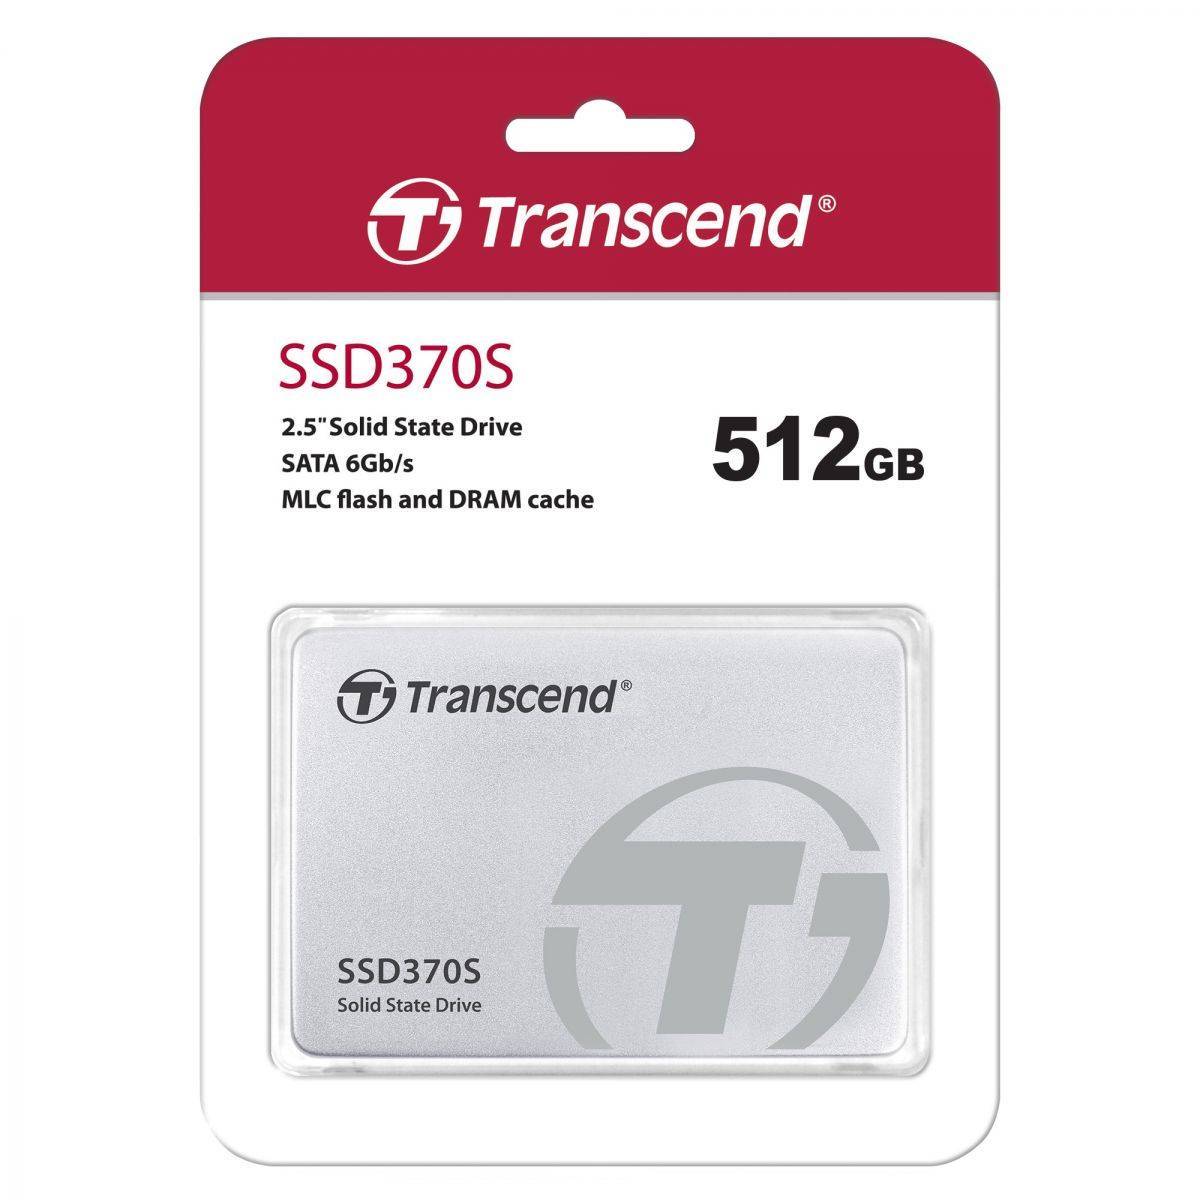 Transcend 512GB SSD, 2.5",  MLC, TS6500, 128MB DDR3, (Advanced Power shield, DevSleep mode) new package